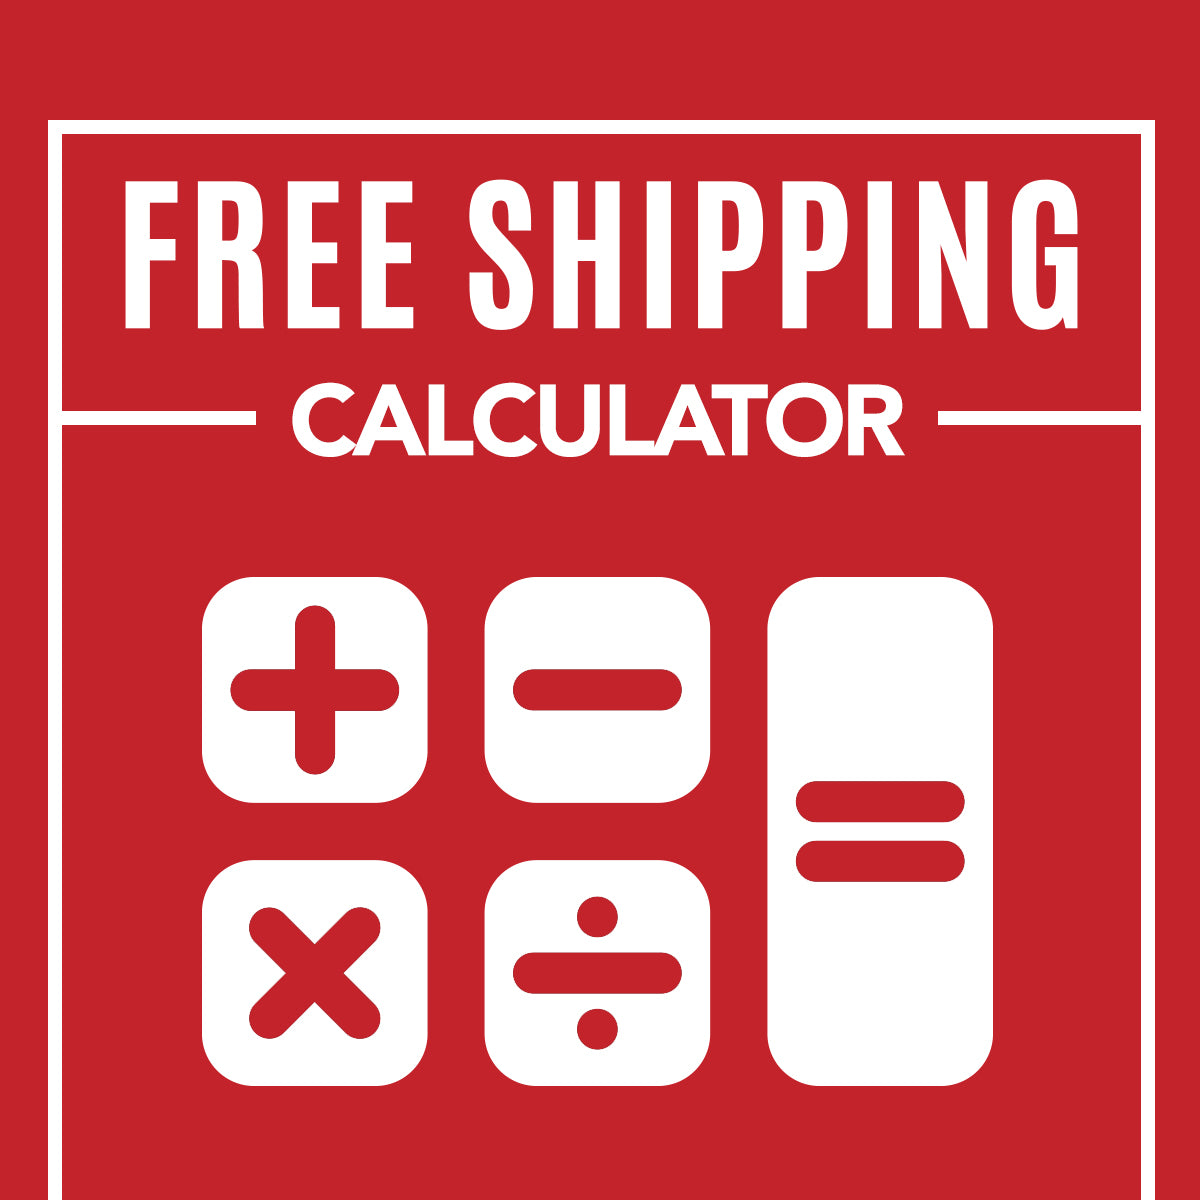 FREE Shipping calculator